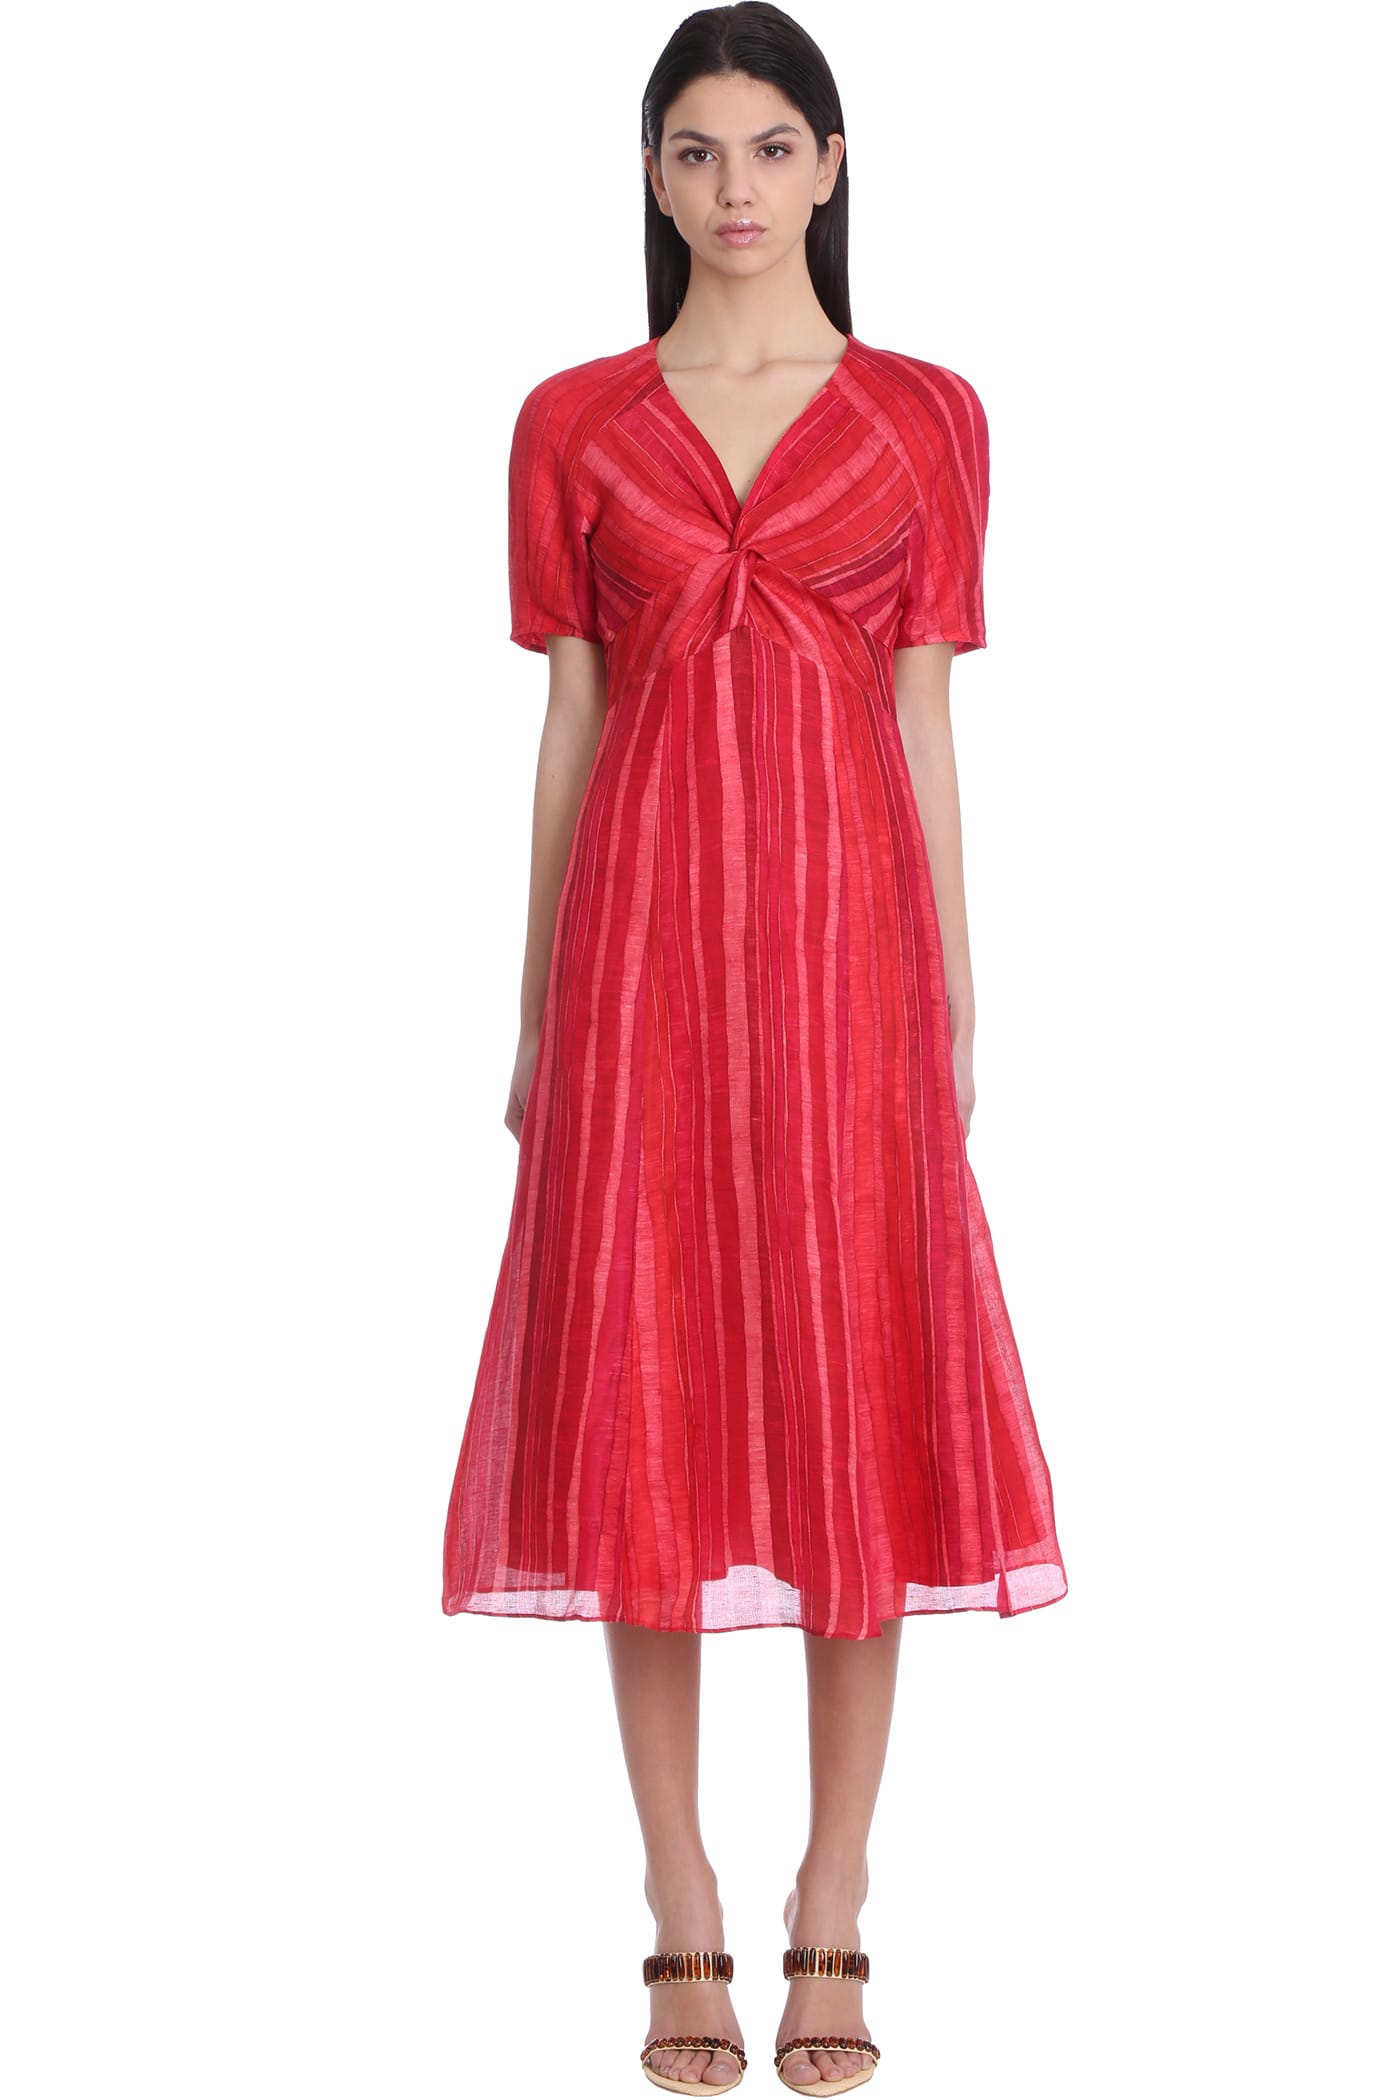 Cult Gaia Odeya Dress In Red Linen